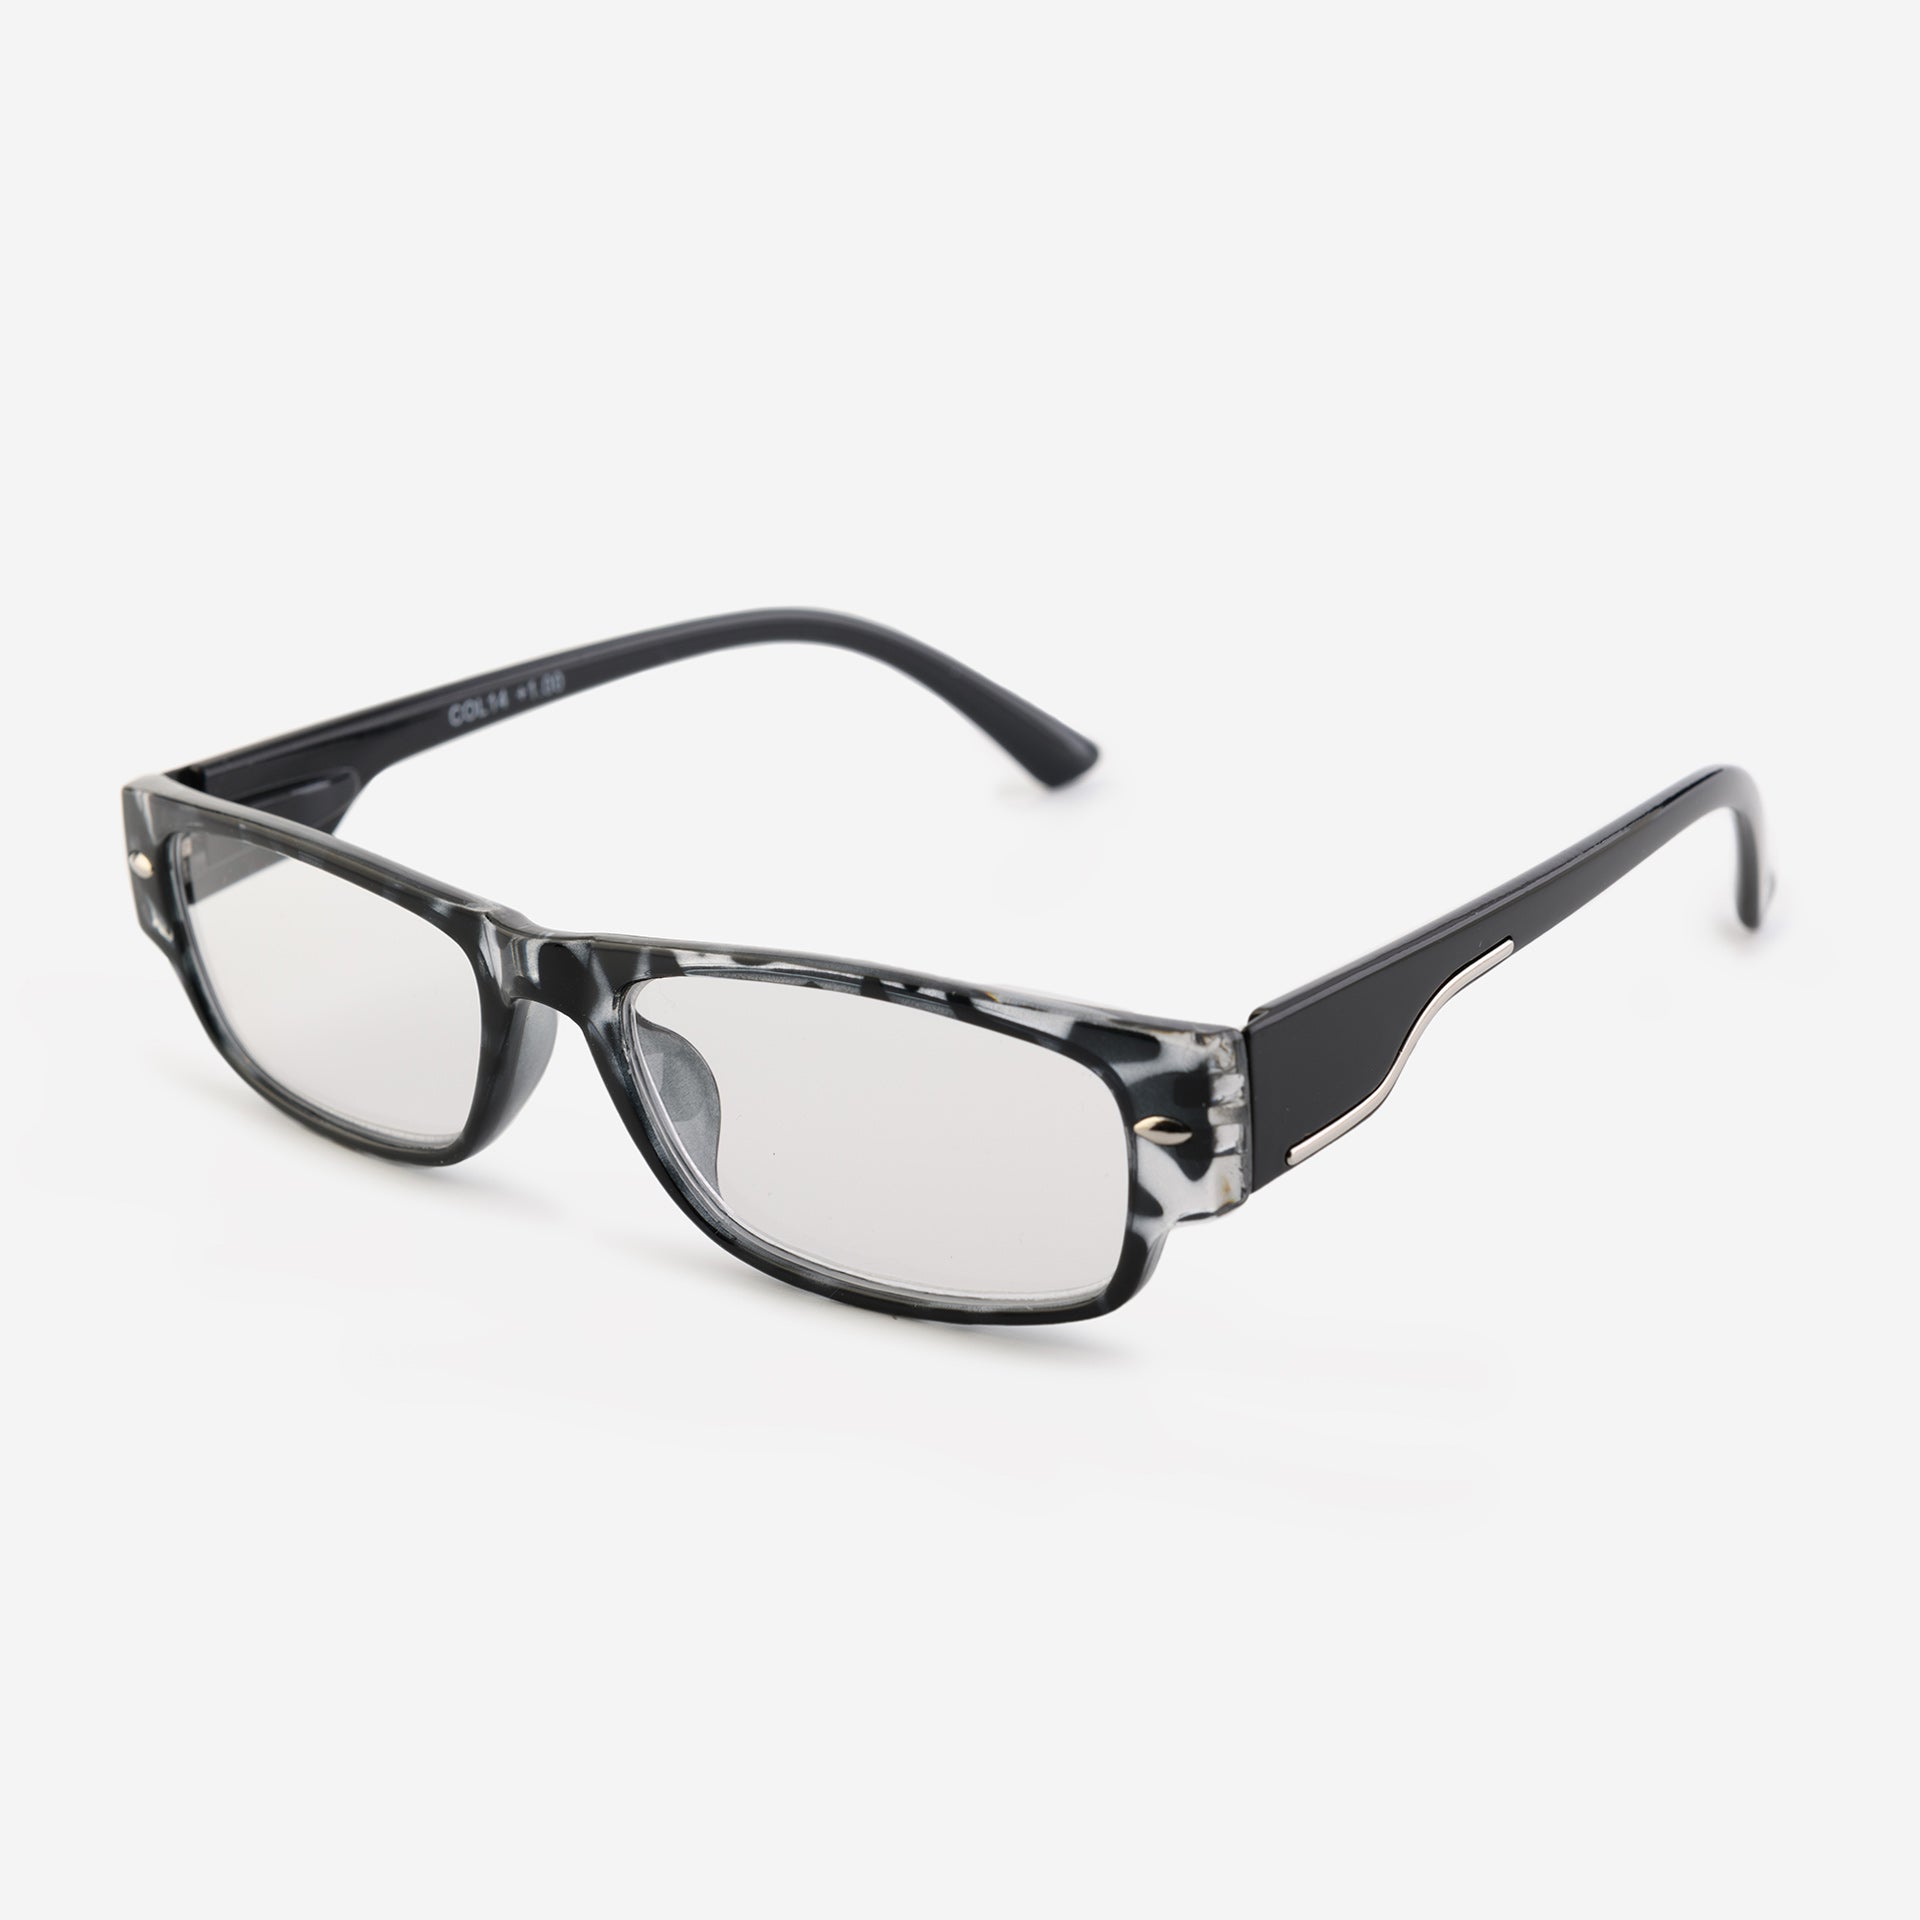 Rectangular reading glasses - black scale pattern